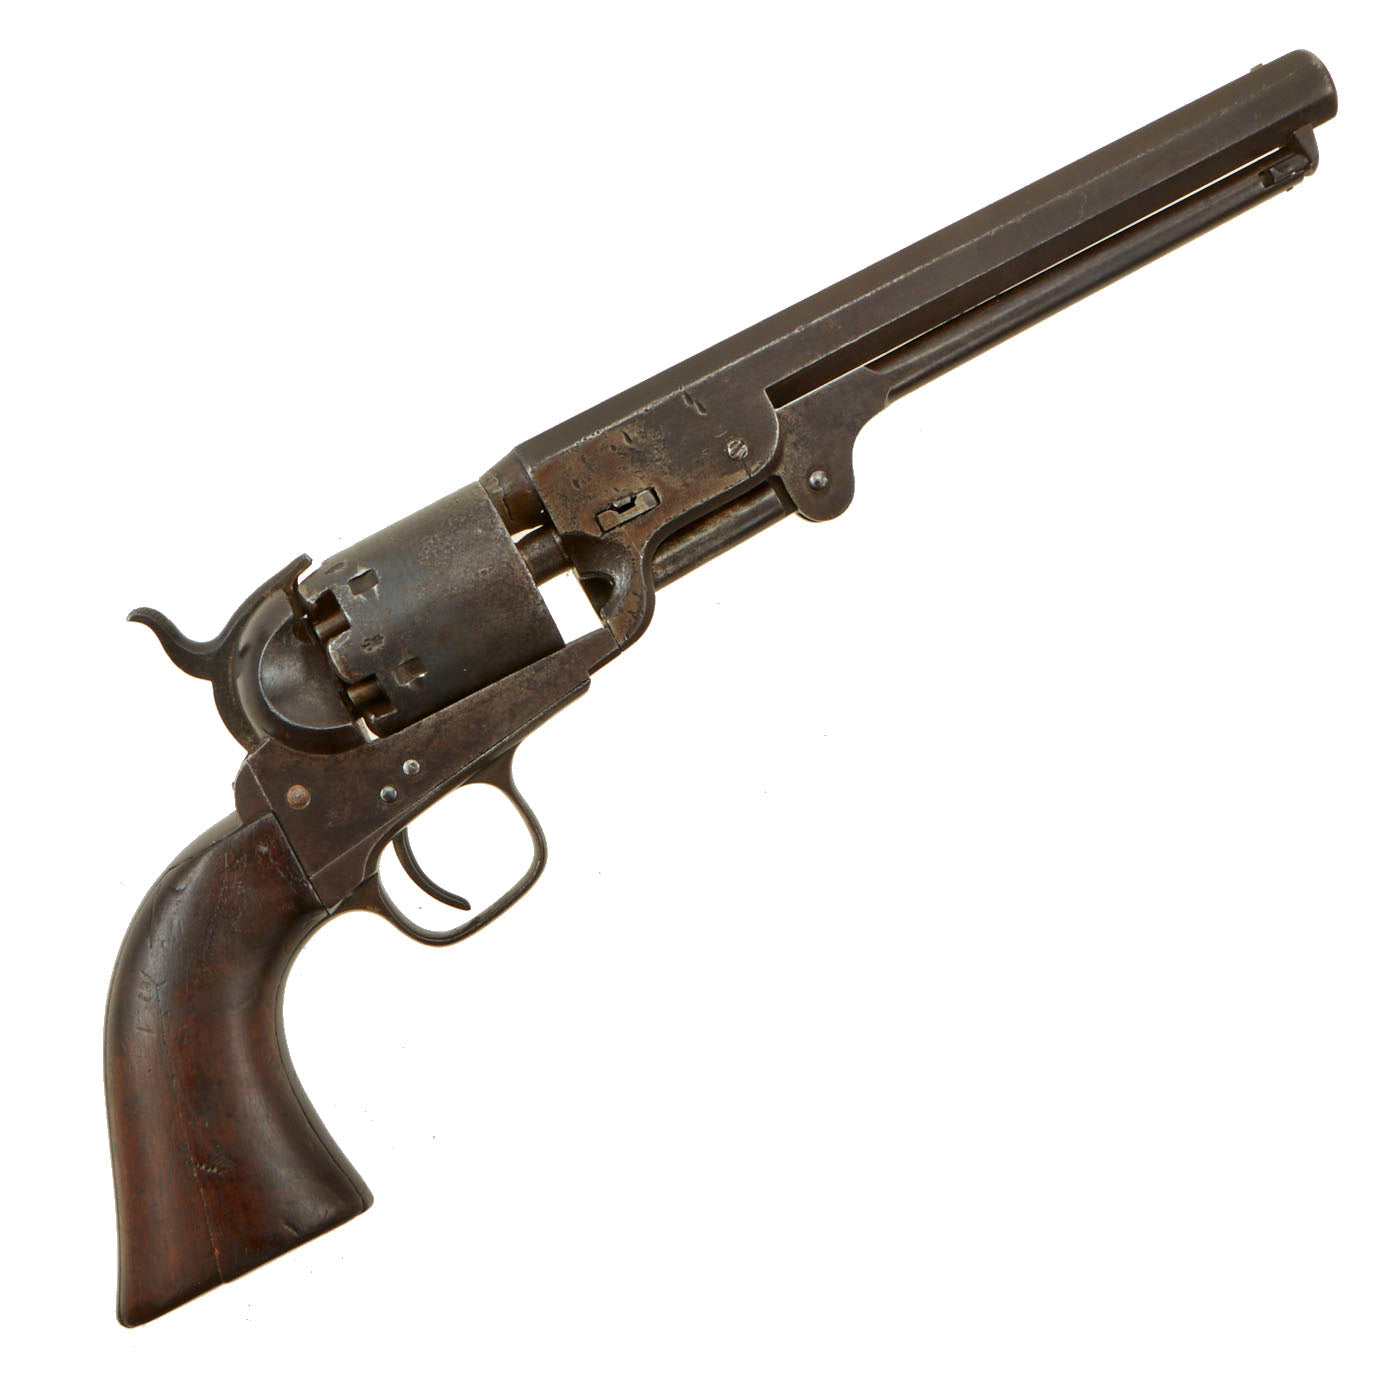 A rare London Colt model 1851 Navy 36 calibre Percussion revolver